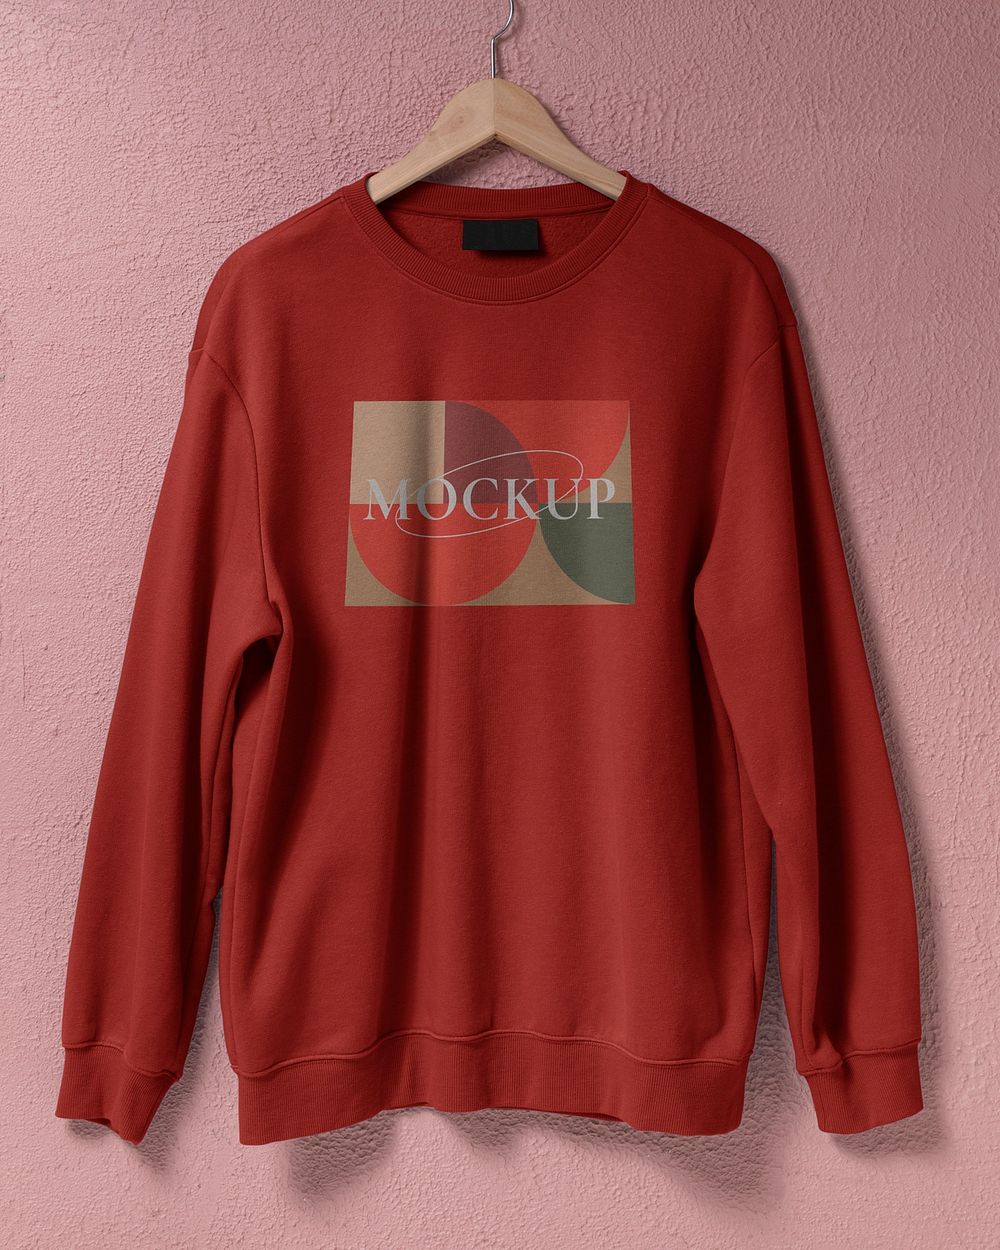 Printed sweater mockup, winter apparel in unisex design psd